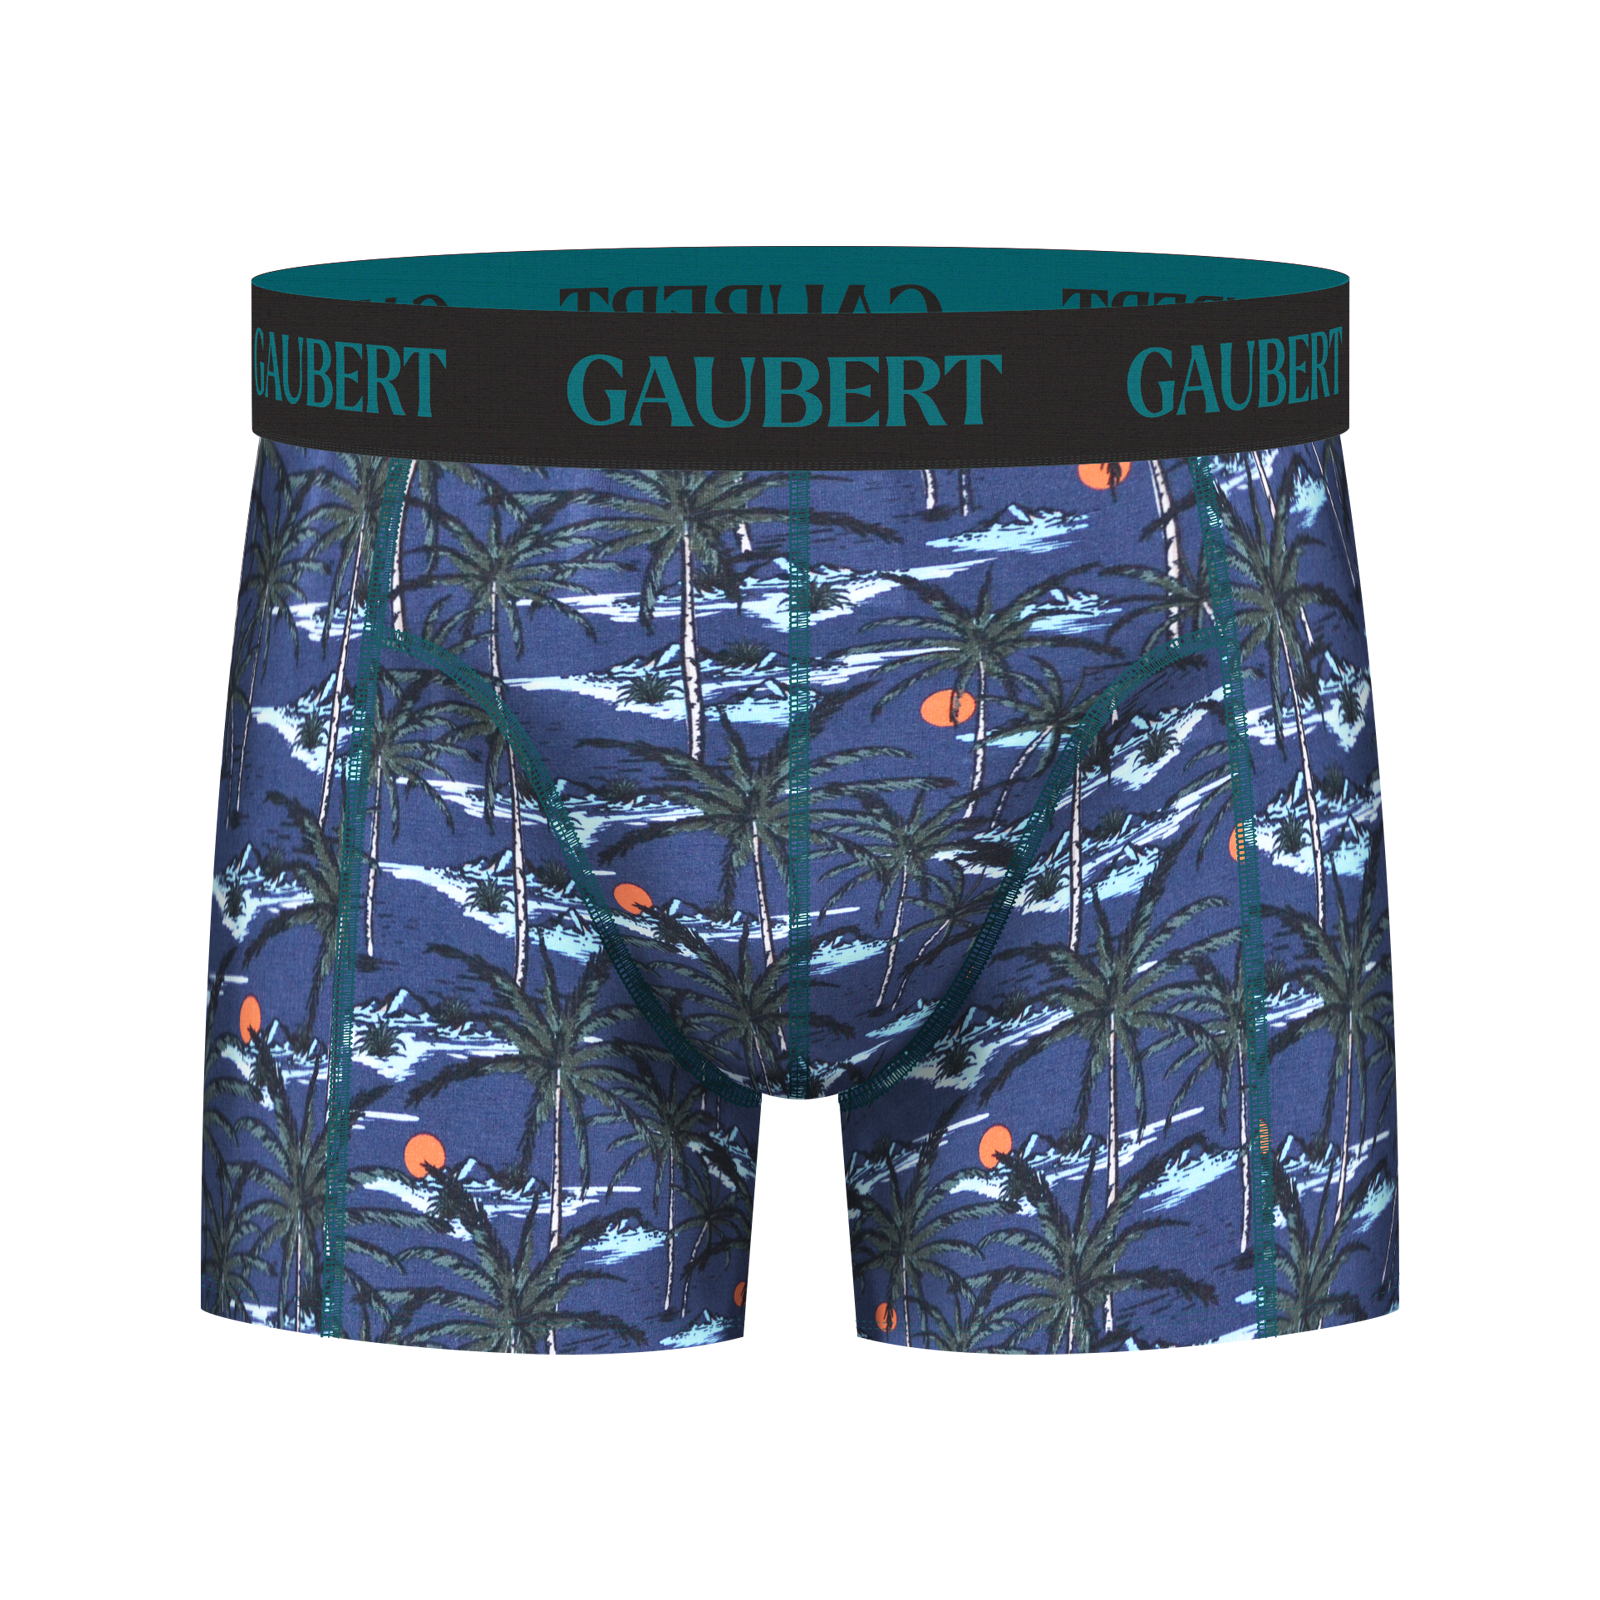 Gaubert Bamboe Boxershorts | 3 Stuks | Caribbean green-goose